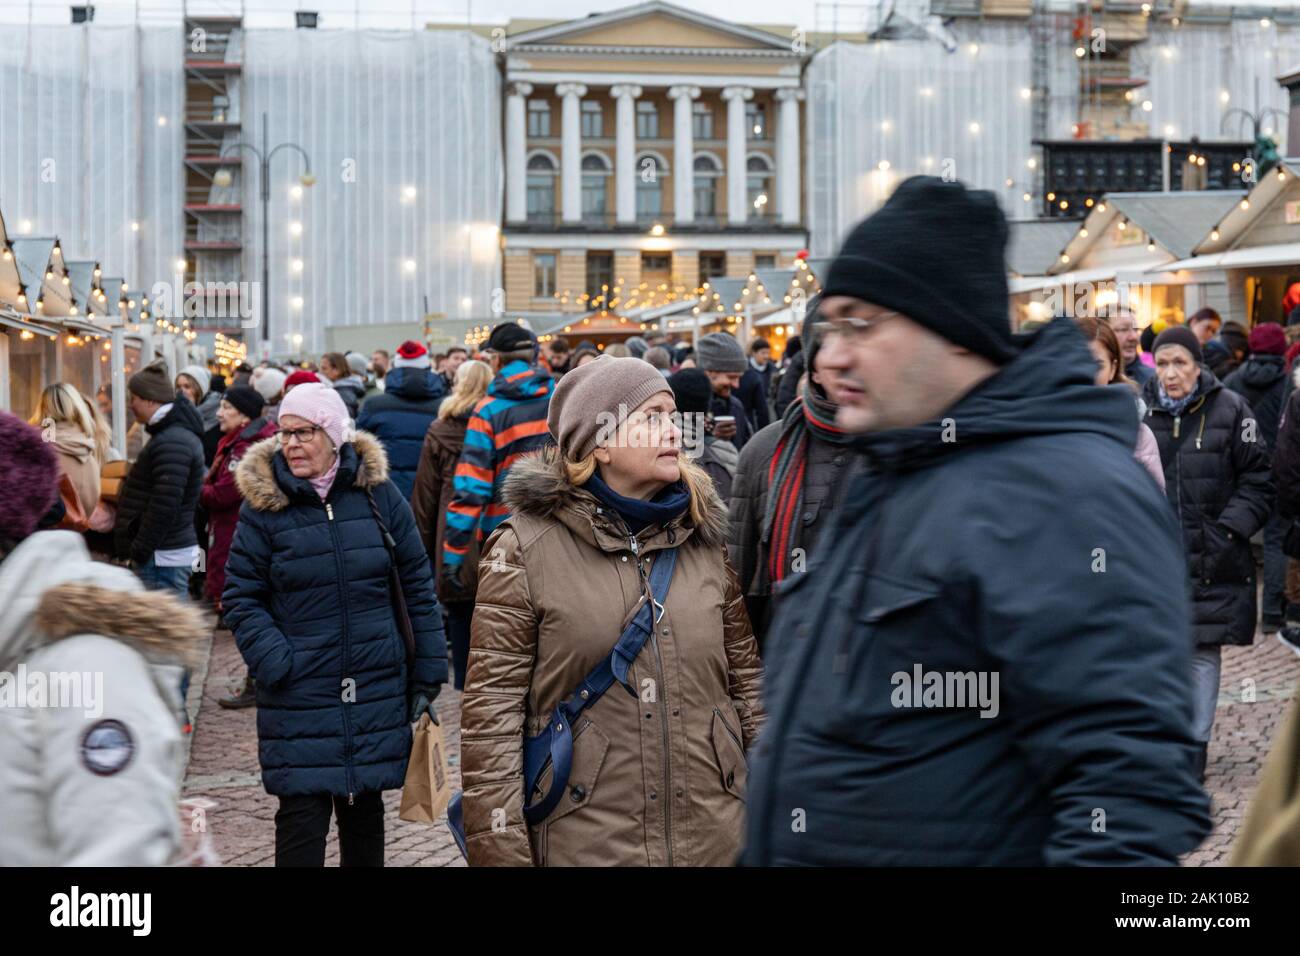 Incidental people at Senate Square Christmas Market in Helsinki, Finland Stock Photo